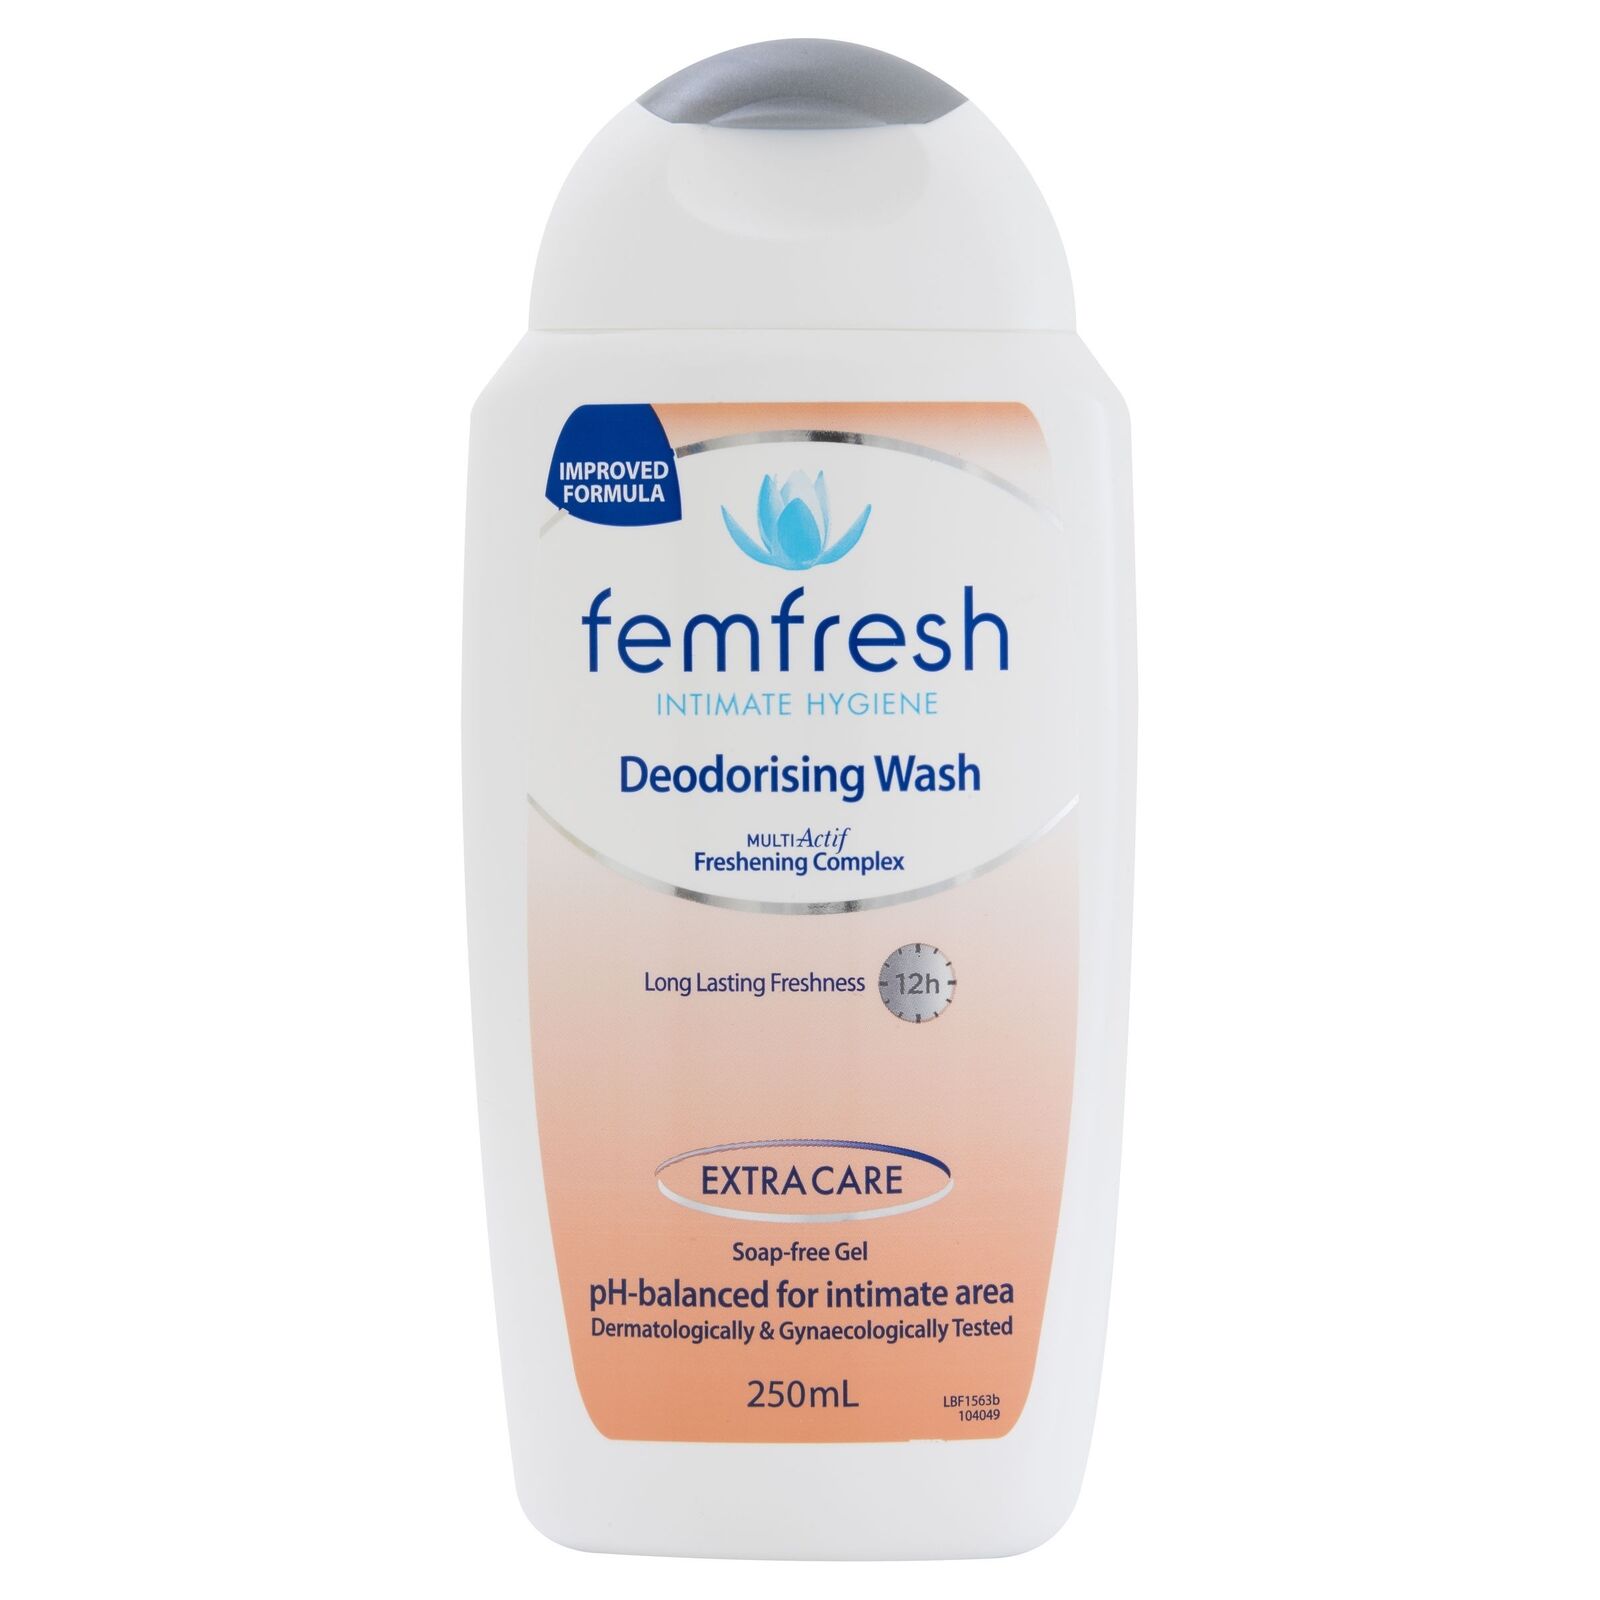 Femfresh Deodorising Wash long lasting freshness 12 hours 250ml